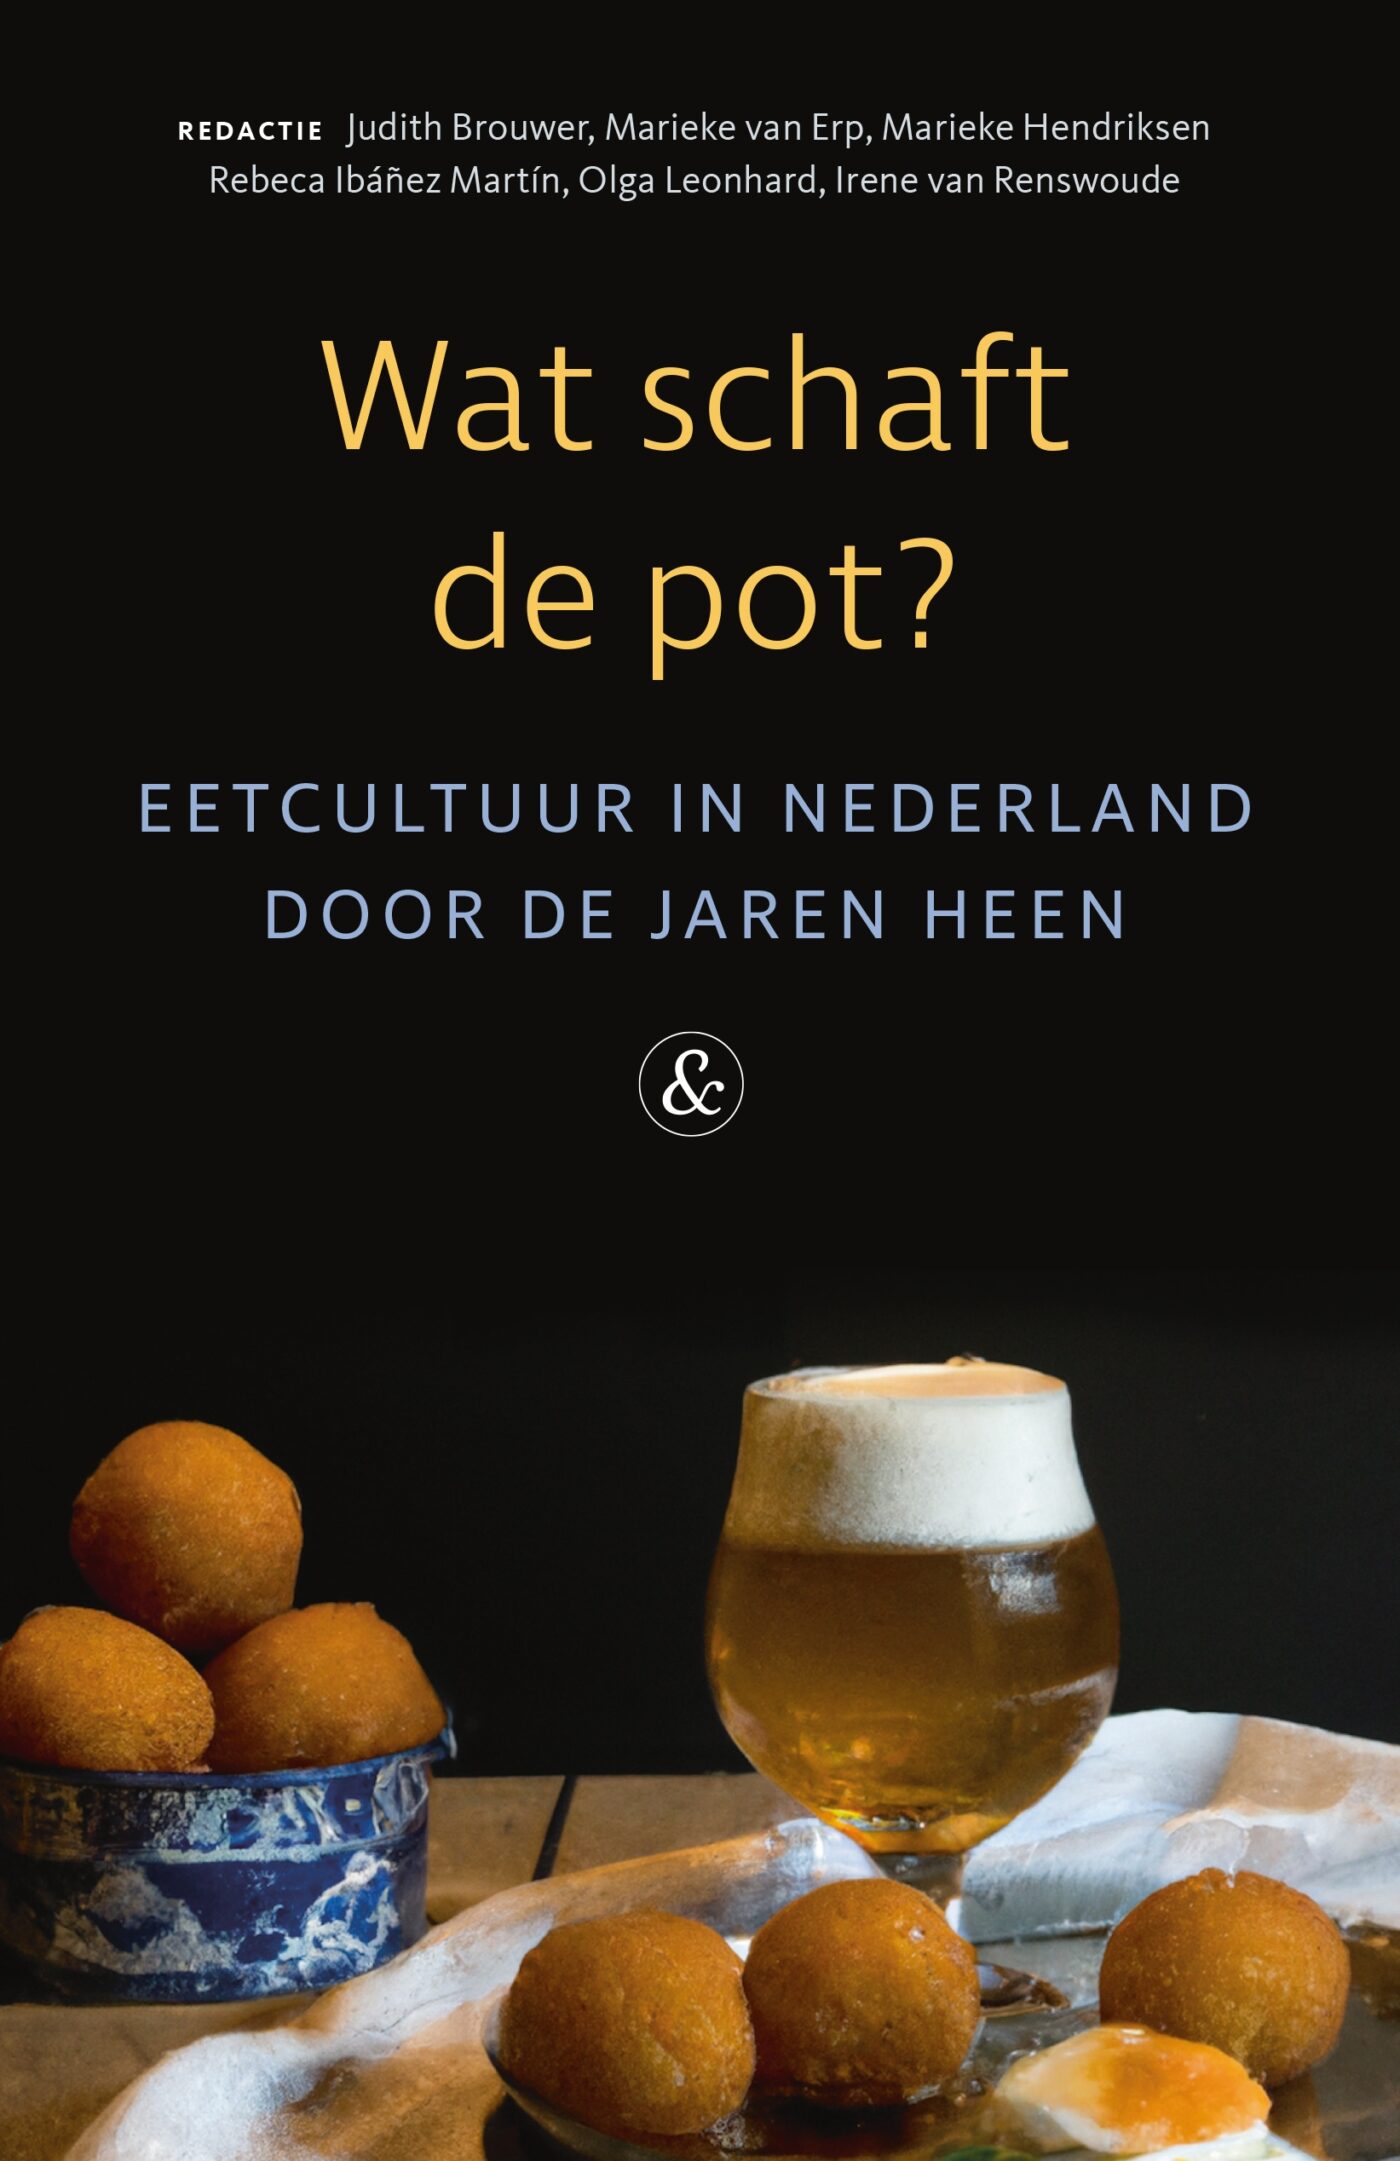 Nederlandse eetcultuur